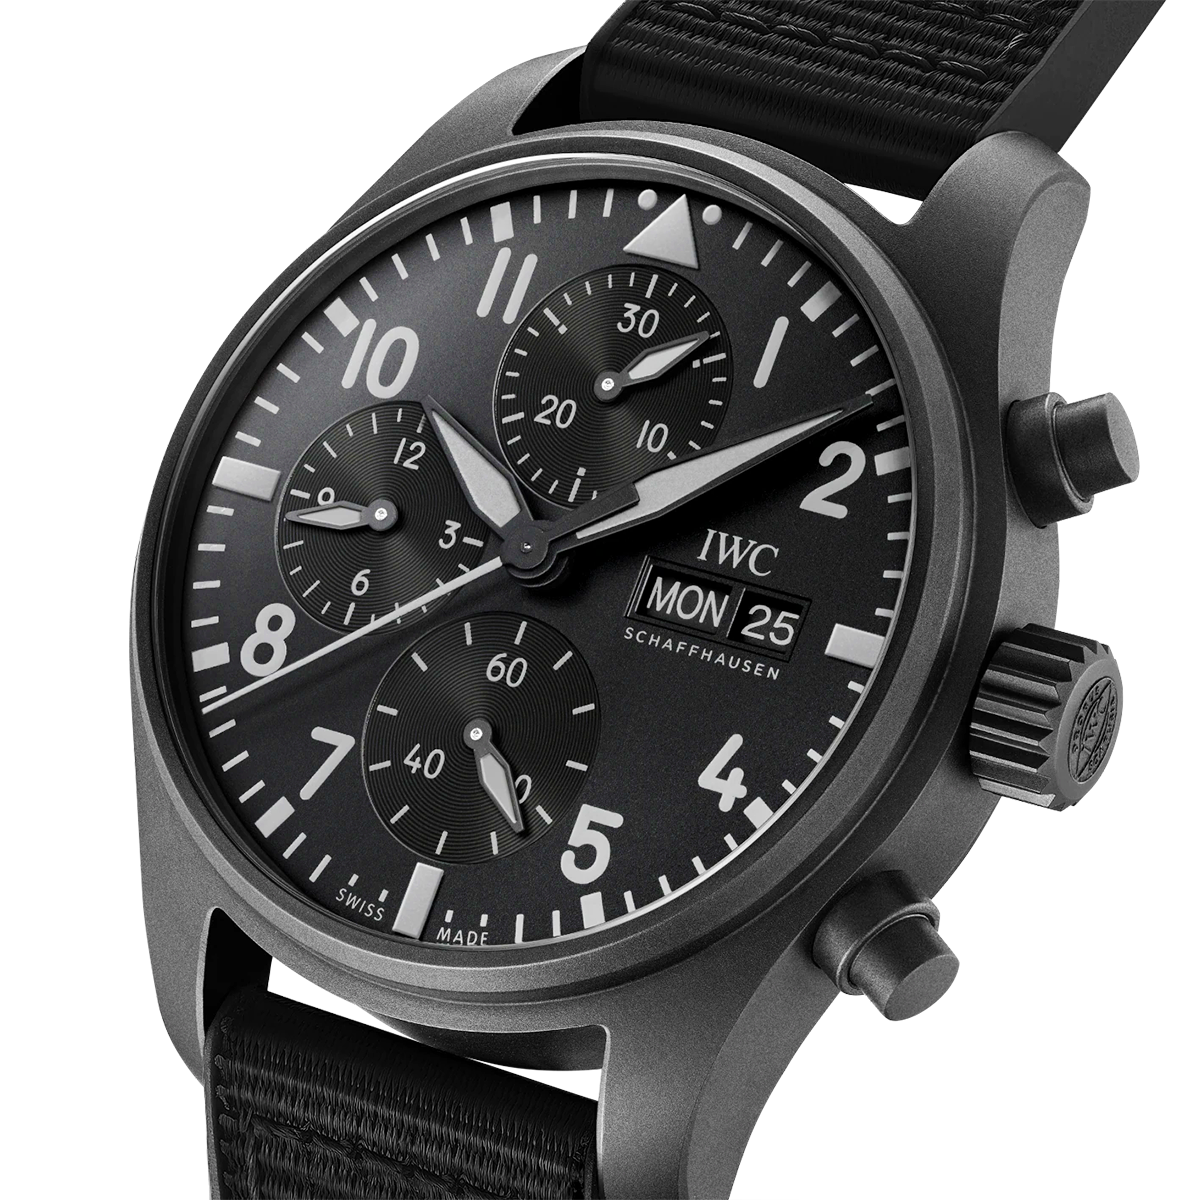 Pilot's Top Gun Ceratanium 41mm Men's Chronograph Watch